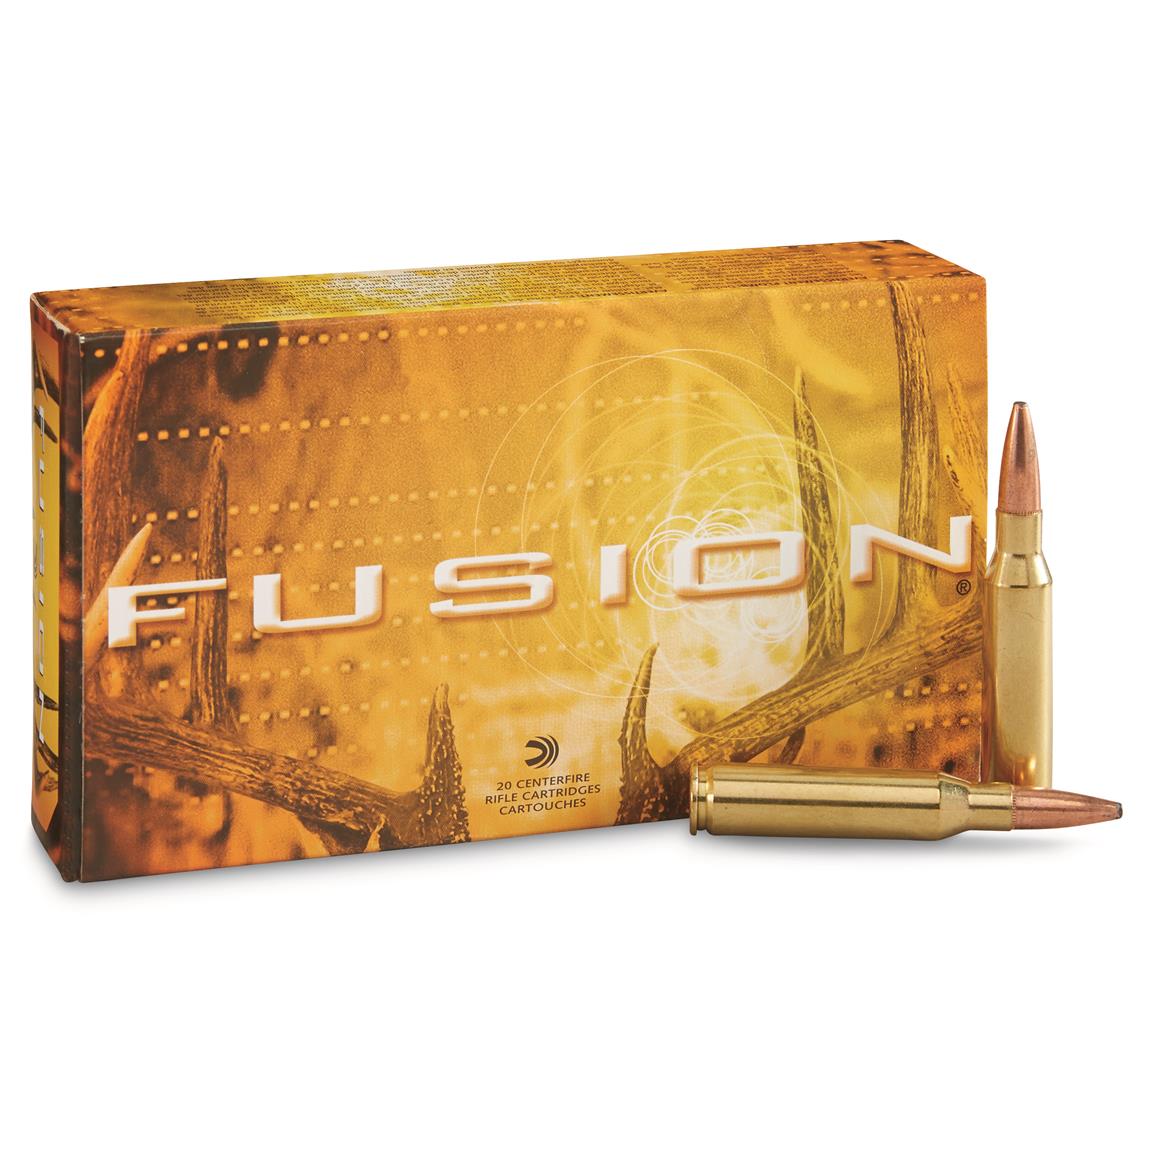 Federal Fusion, 7mm-08 Remington, Fusion Bonded, 120 Grain, 20 Rounds